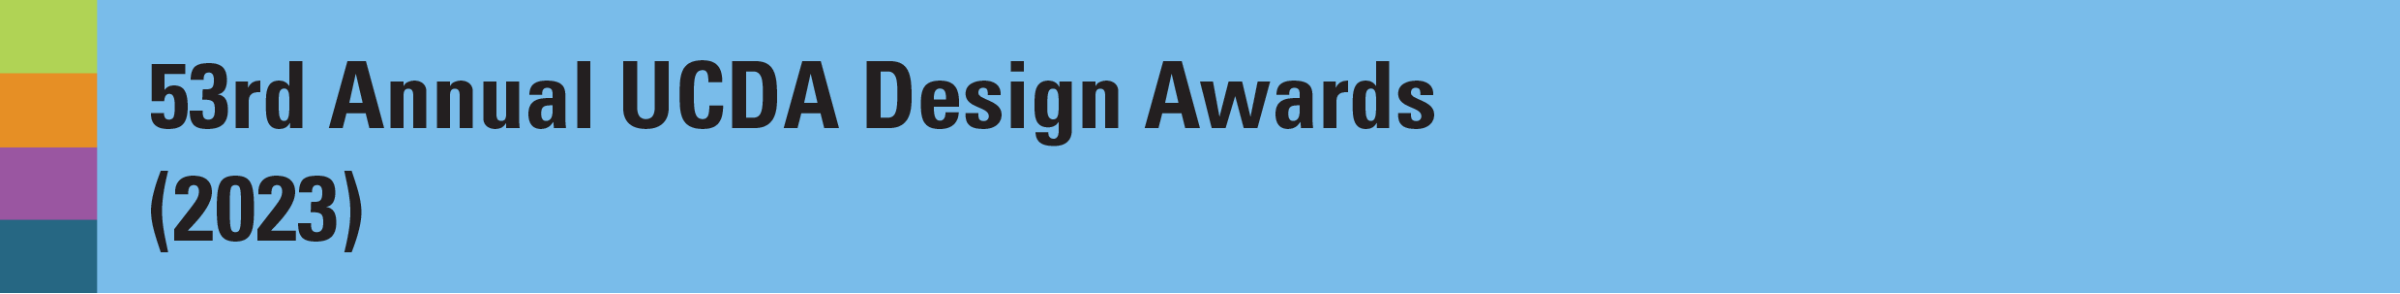 UCDA Design Awards Show Header 2023